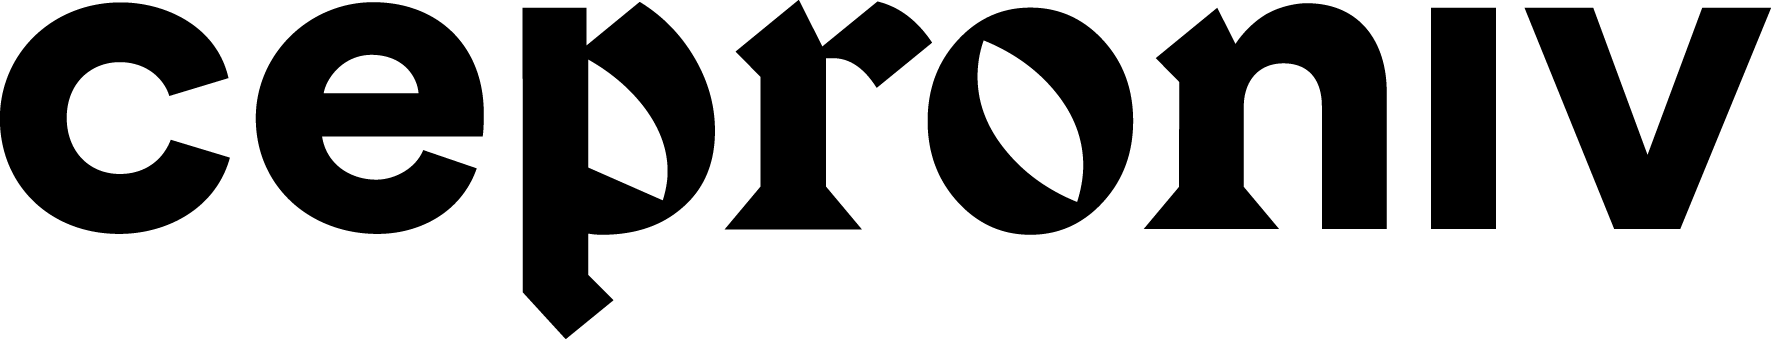 logo CEPRONIV